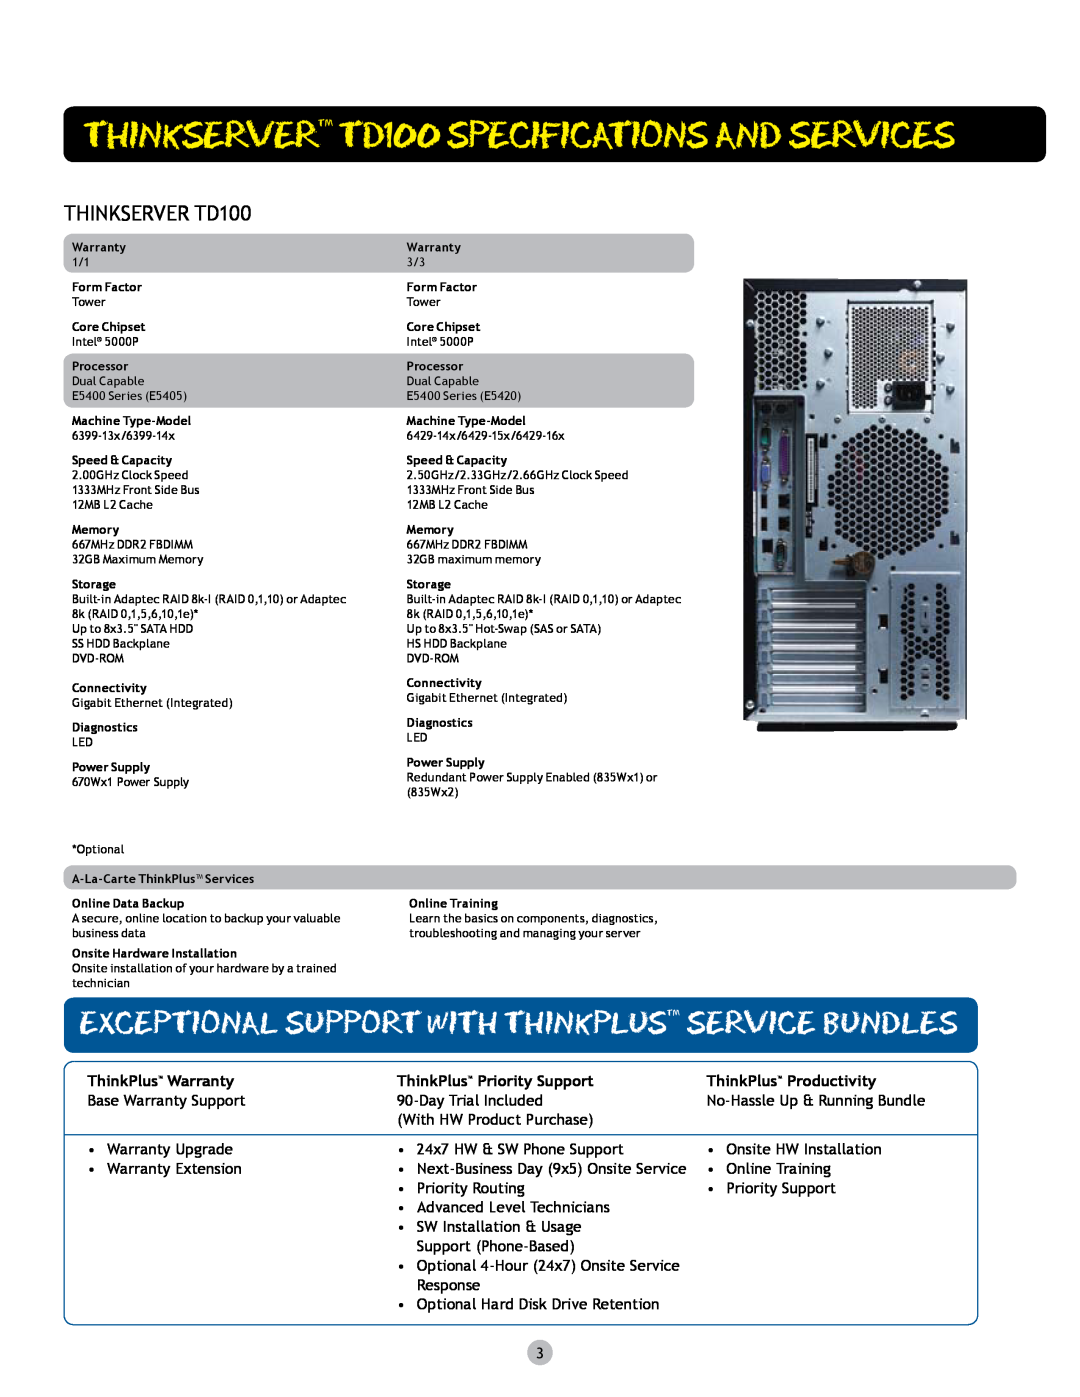 Lenovo 6399-13x, 6429-14x, 6399-14x THINKSERVER TD100 specifications and services, ThinkSERVER TD100, ThinkPlus Warranty 